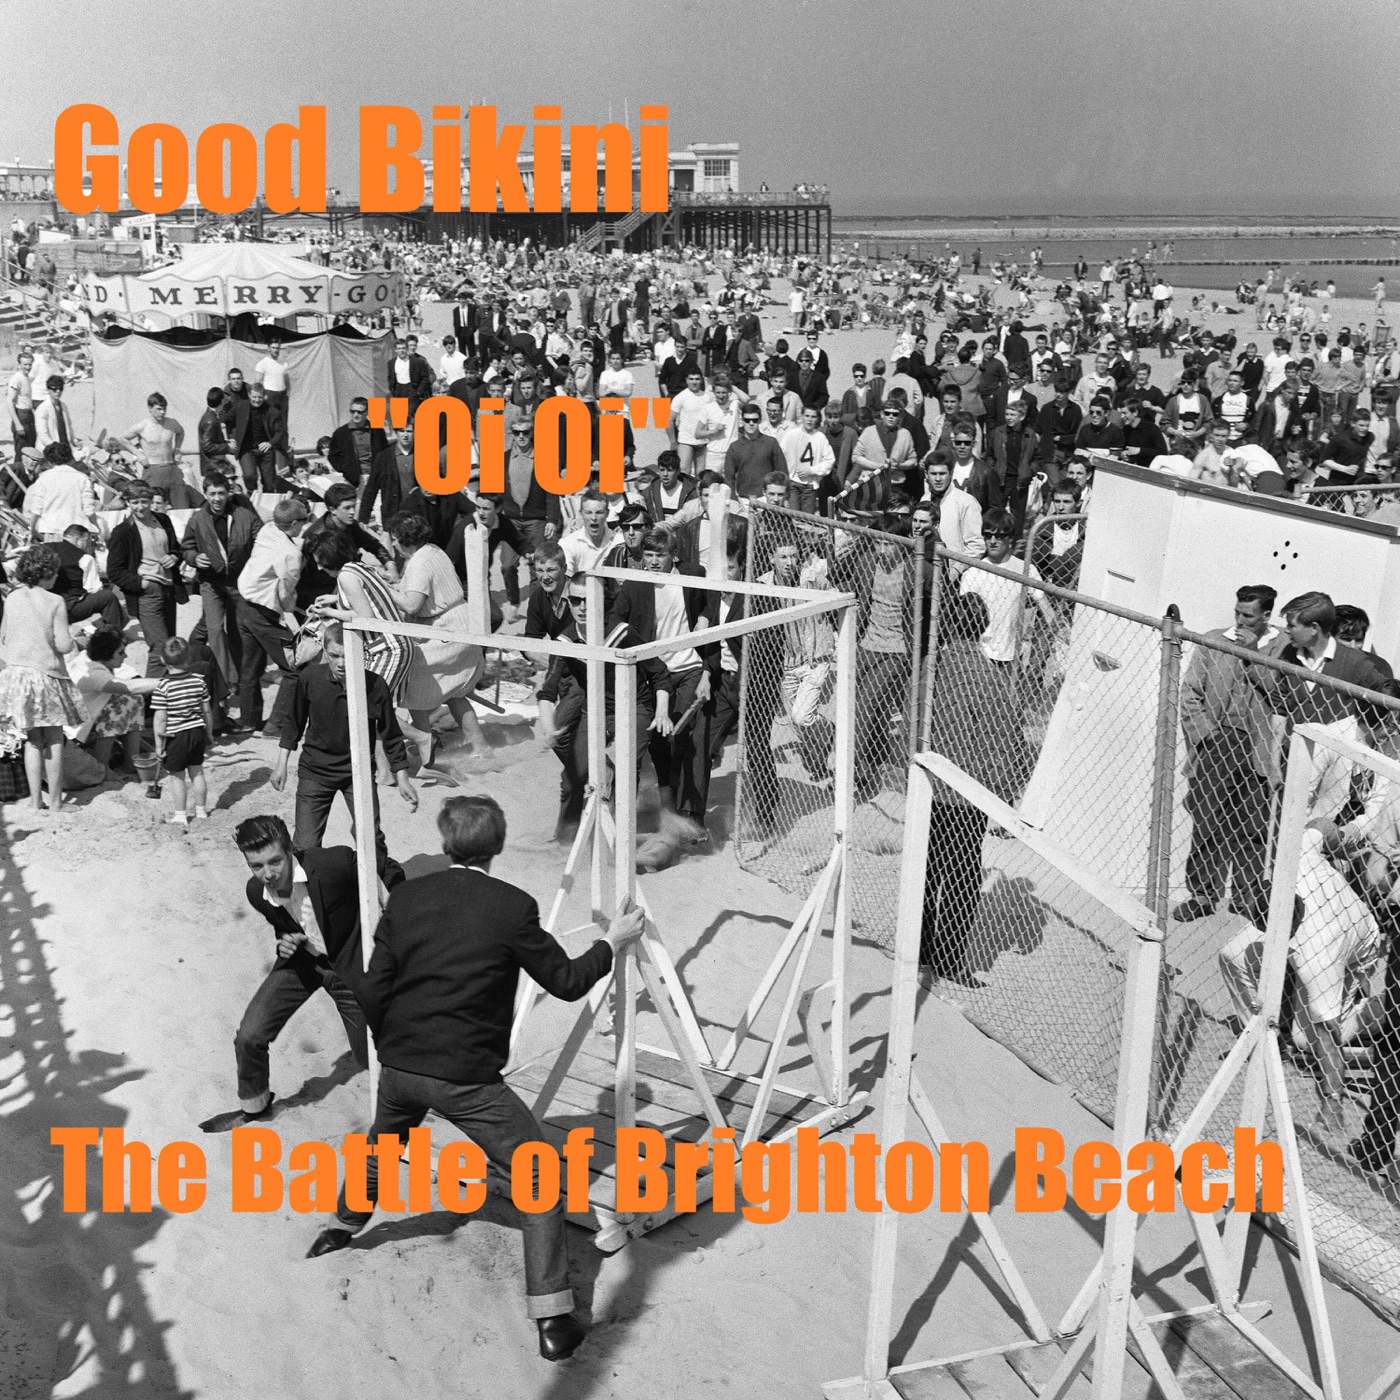 Oi Oi (The Battle of Brighton Beach) by Good Bikini